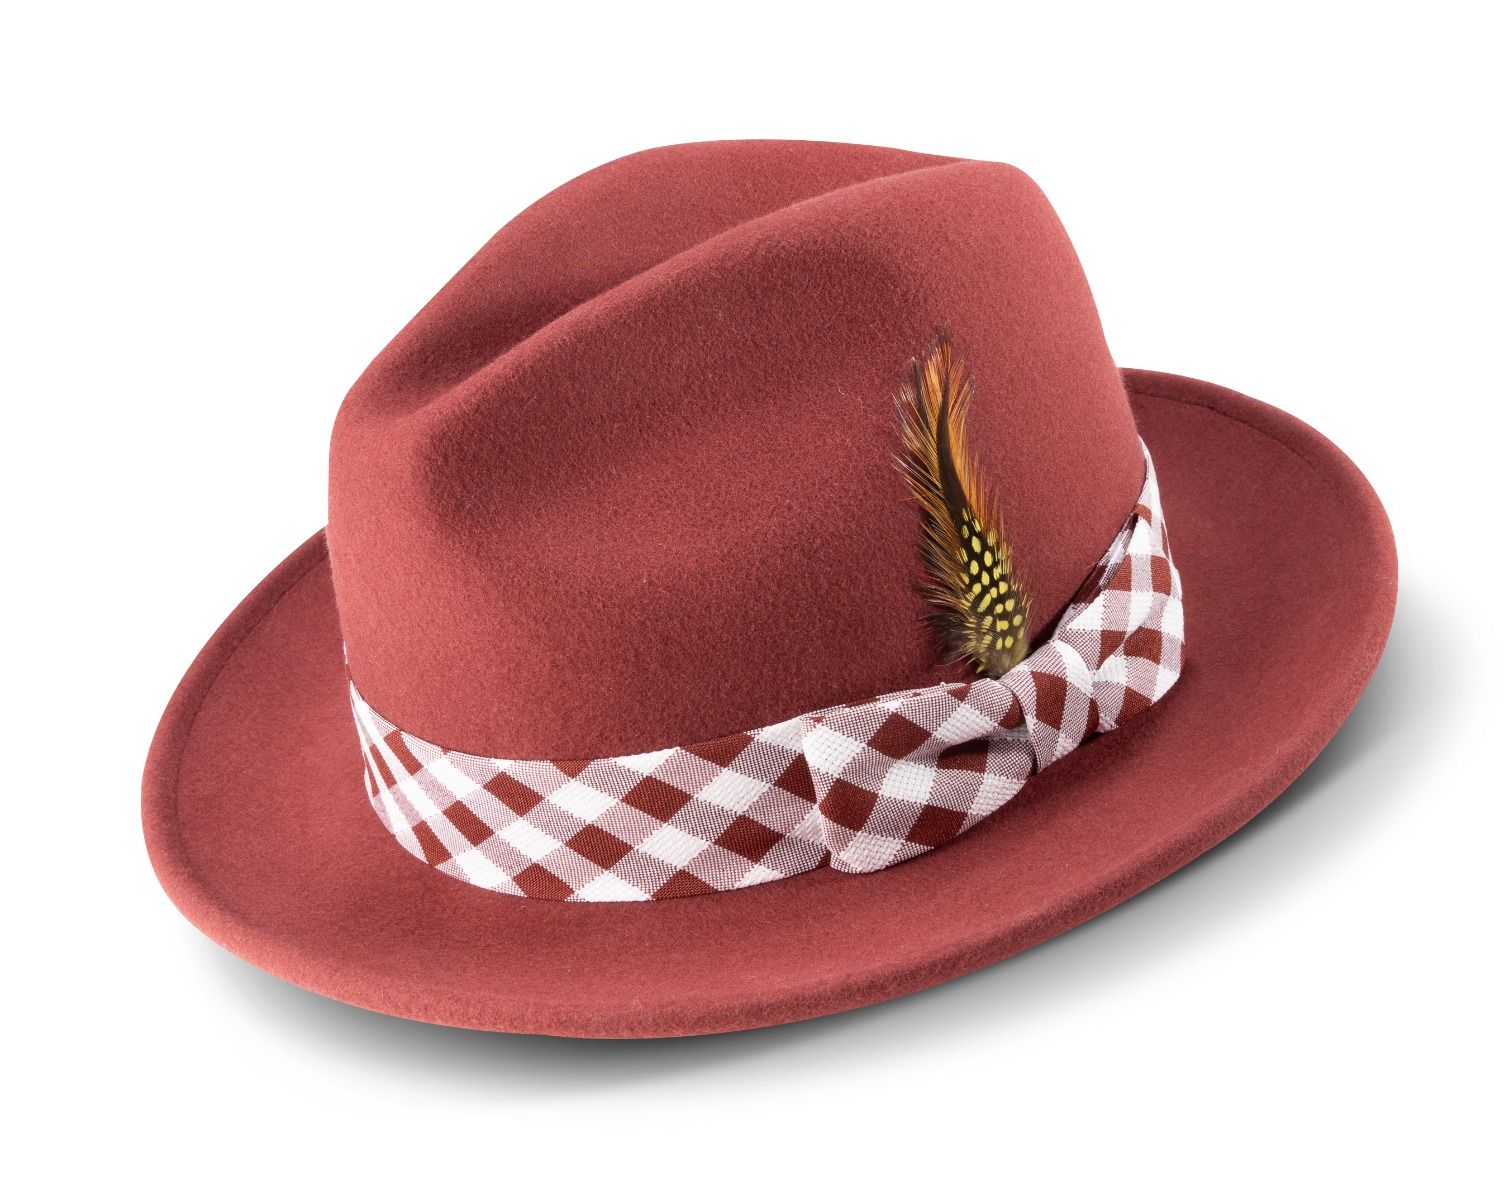 Montique Men's Fedora Style Wool Hat - Sleek Plaid